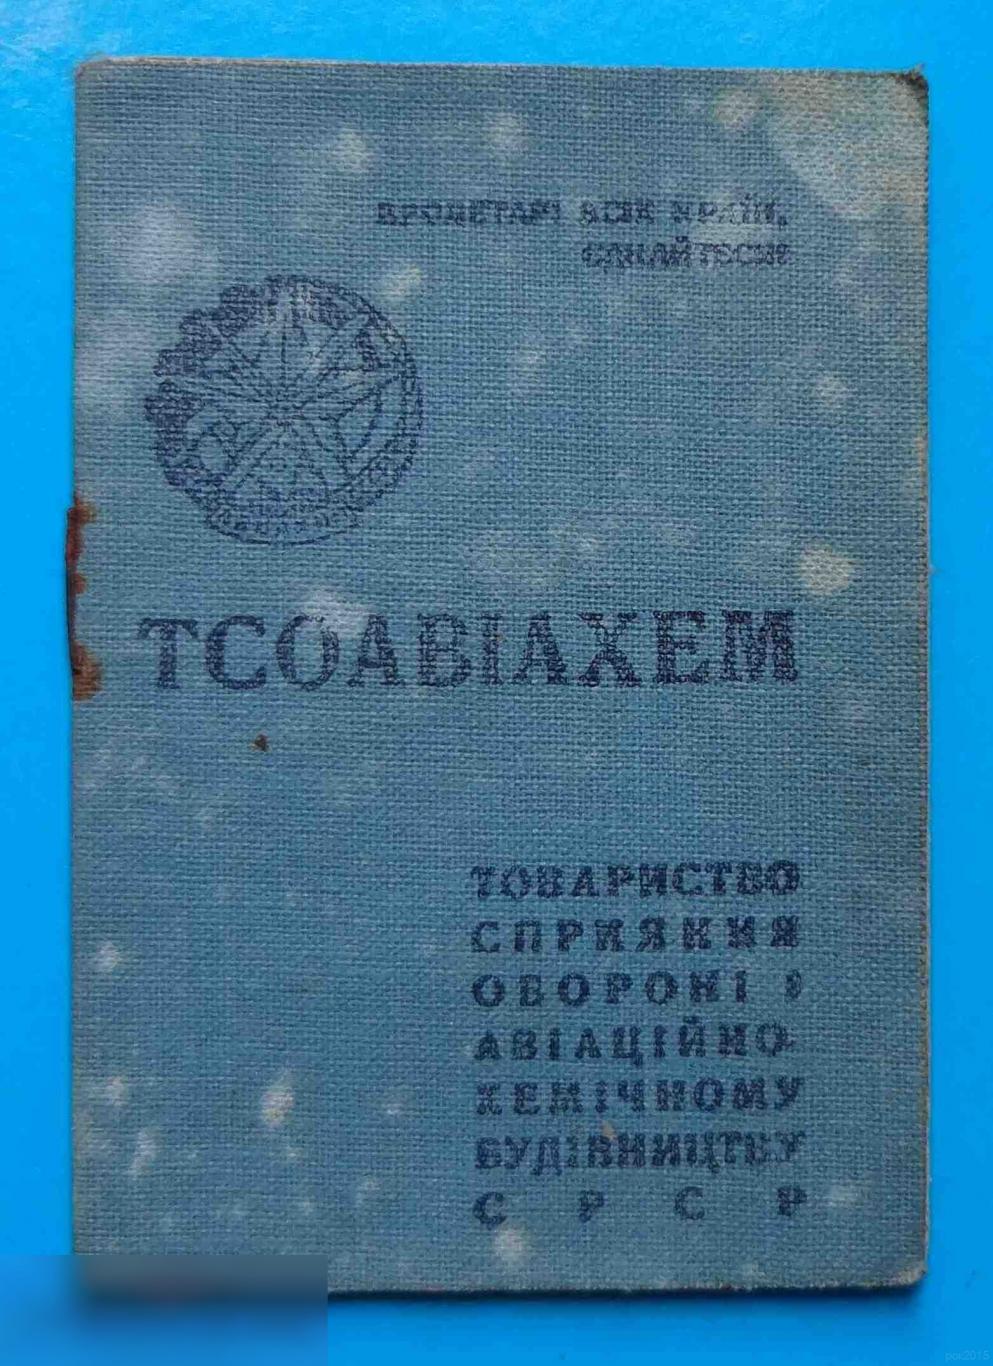 Членский билет ТСОАВИАХИМ ОСОАВИАХИМ УССР 1937 док 2